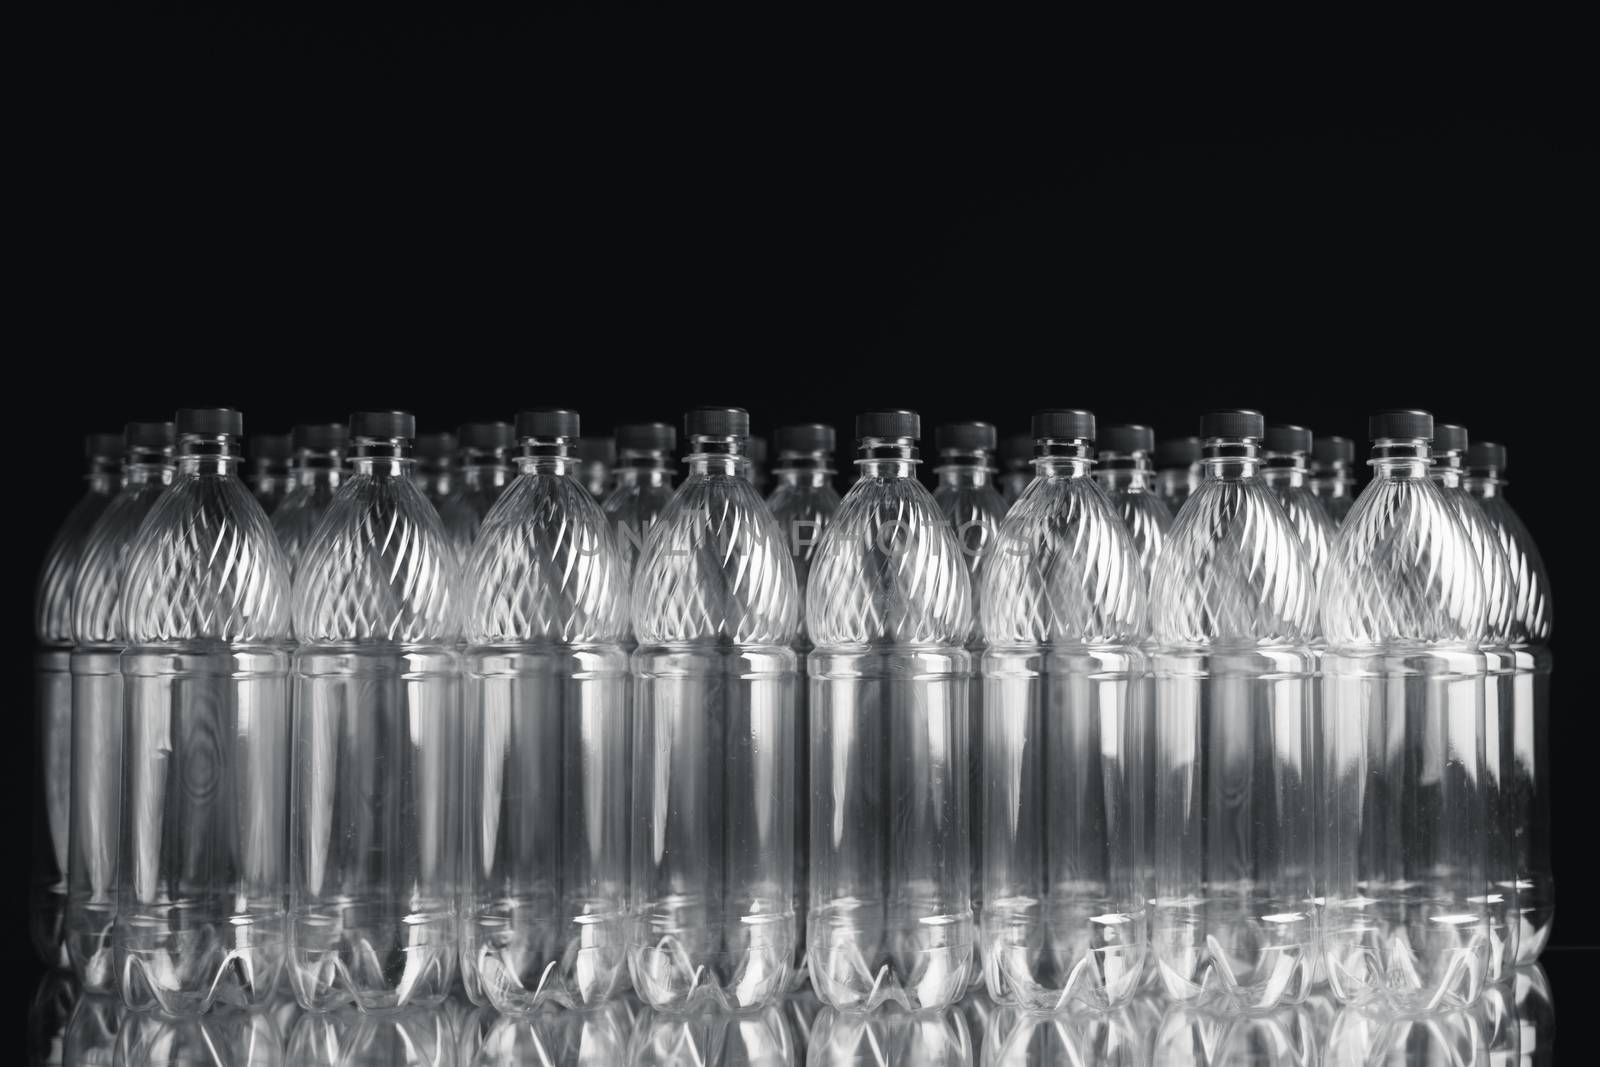 empty plastic bottles on black background